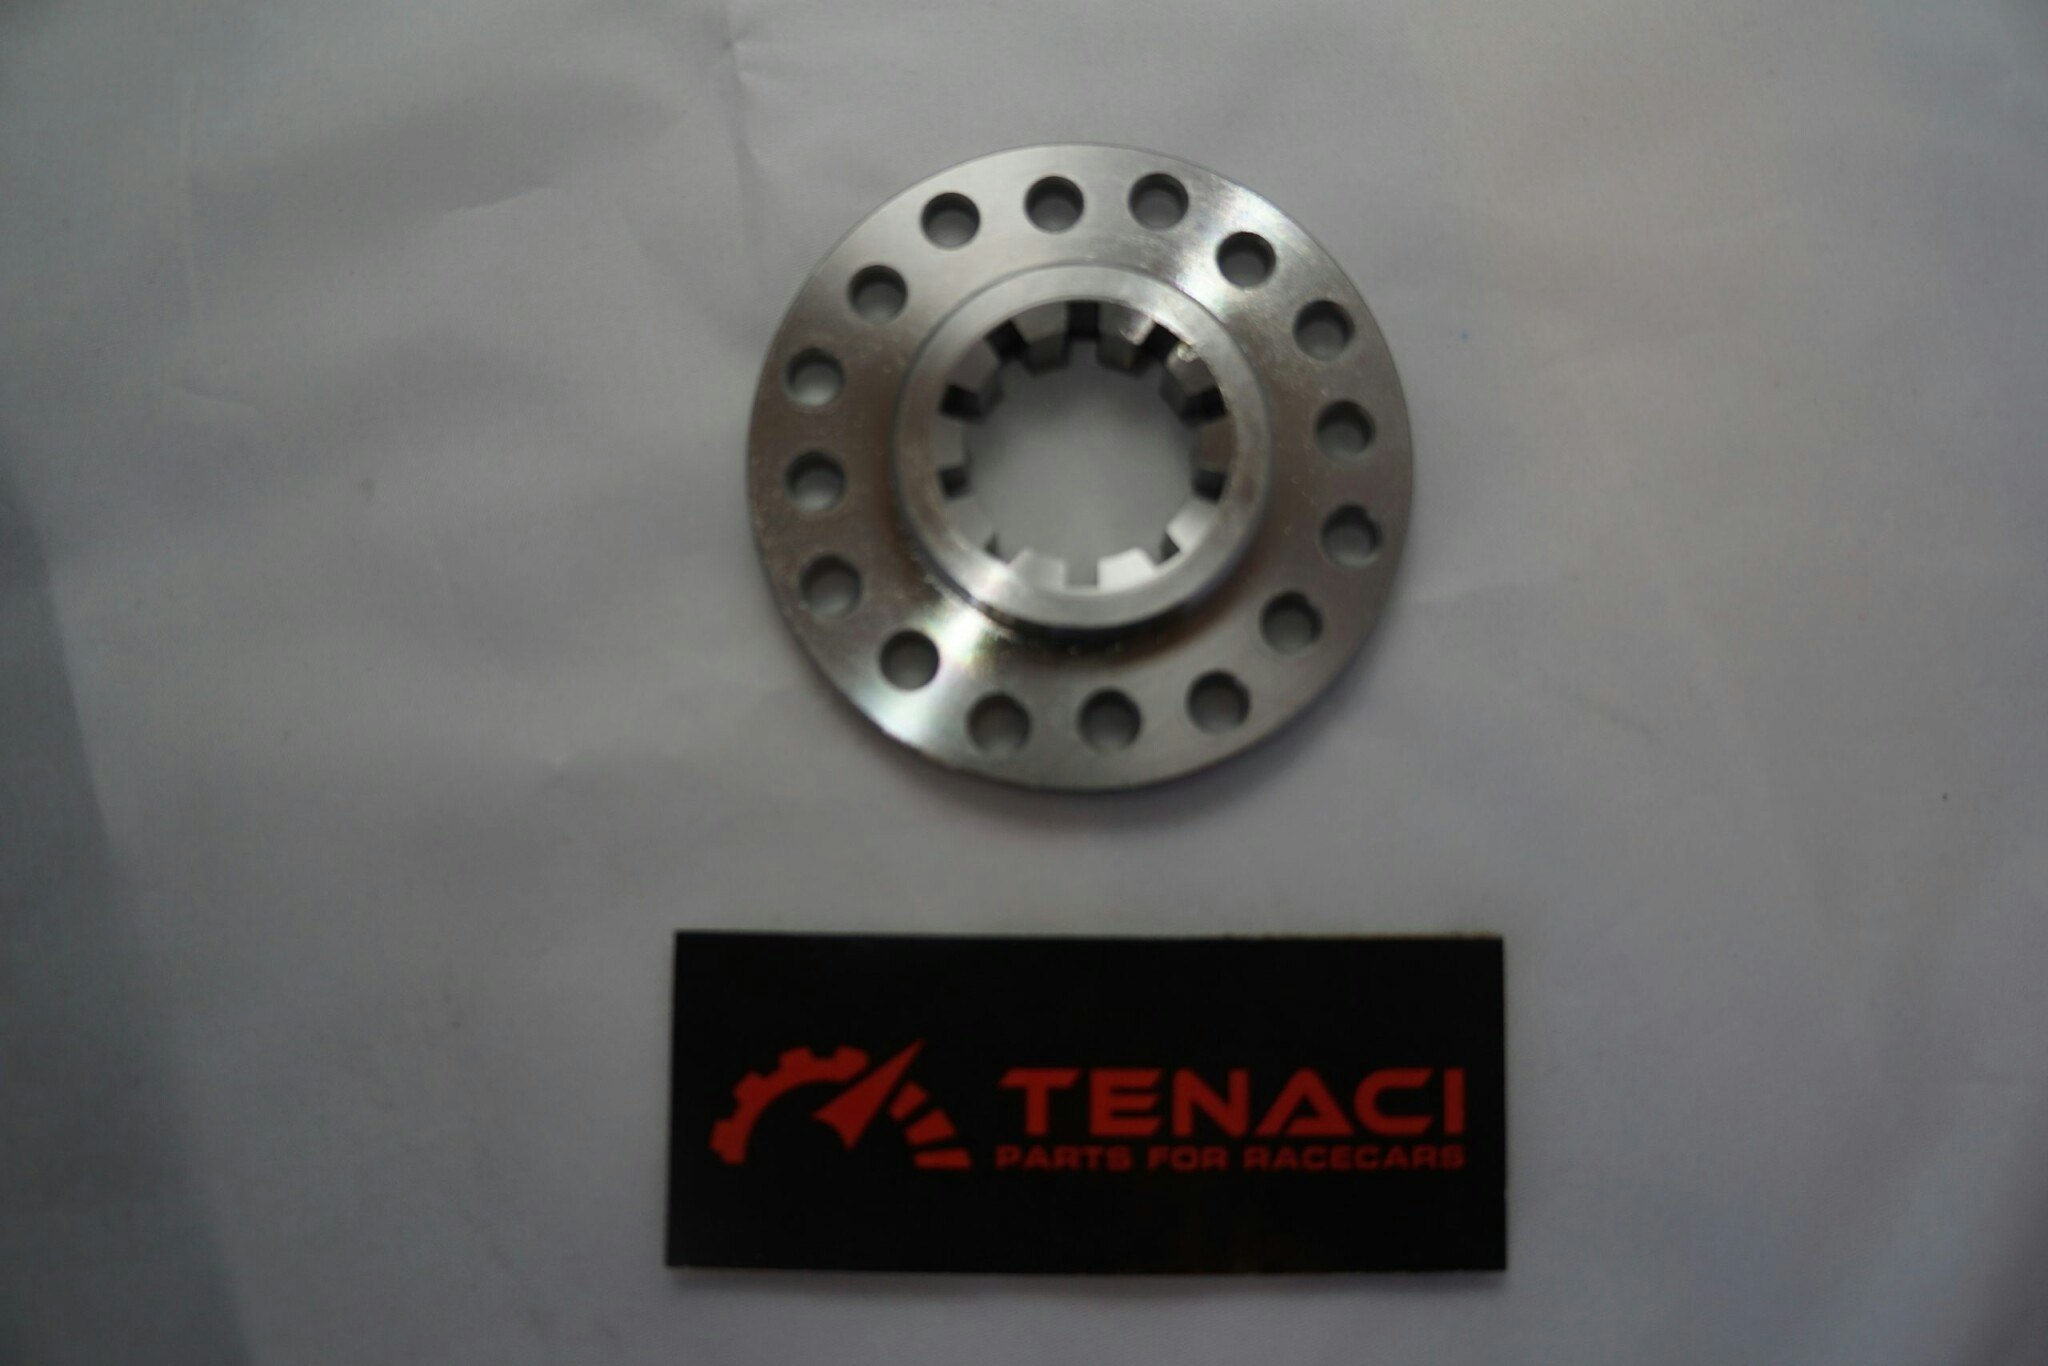 Tenaci disc hub - Toyota R154 - 16 holes